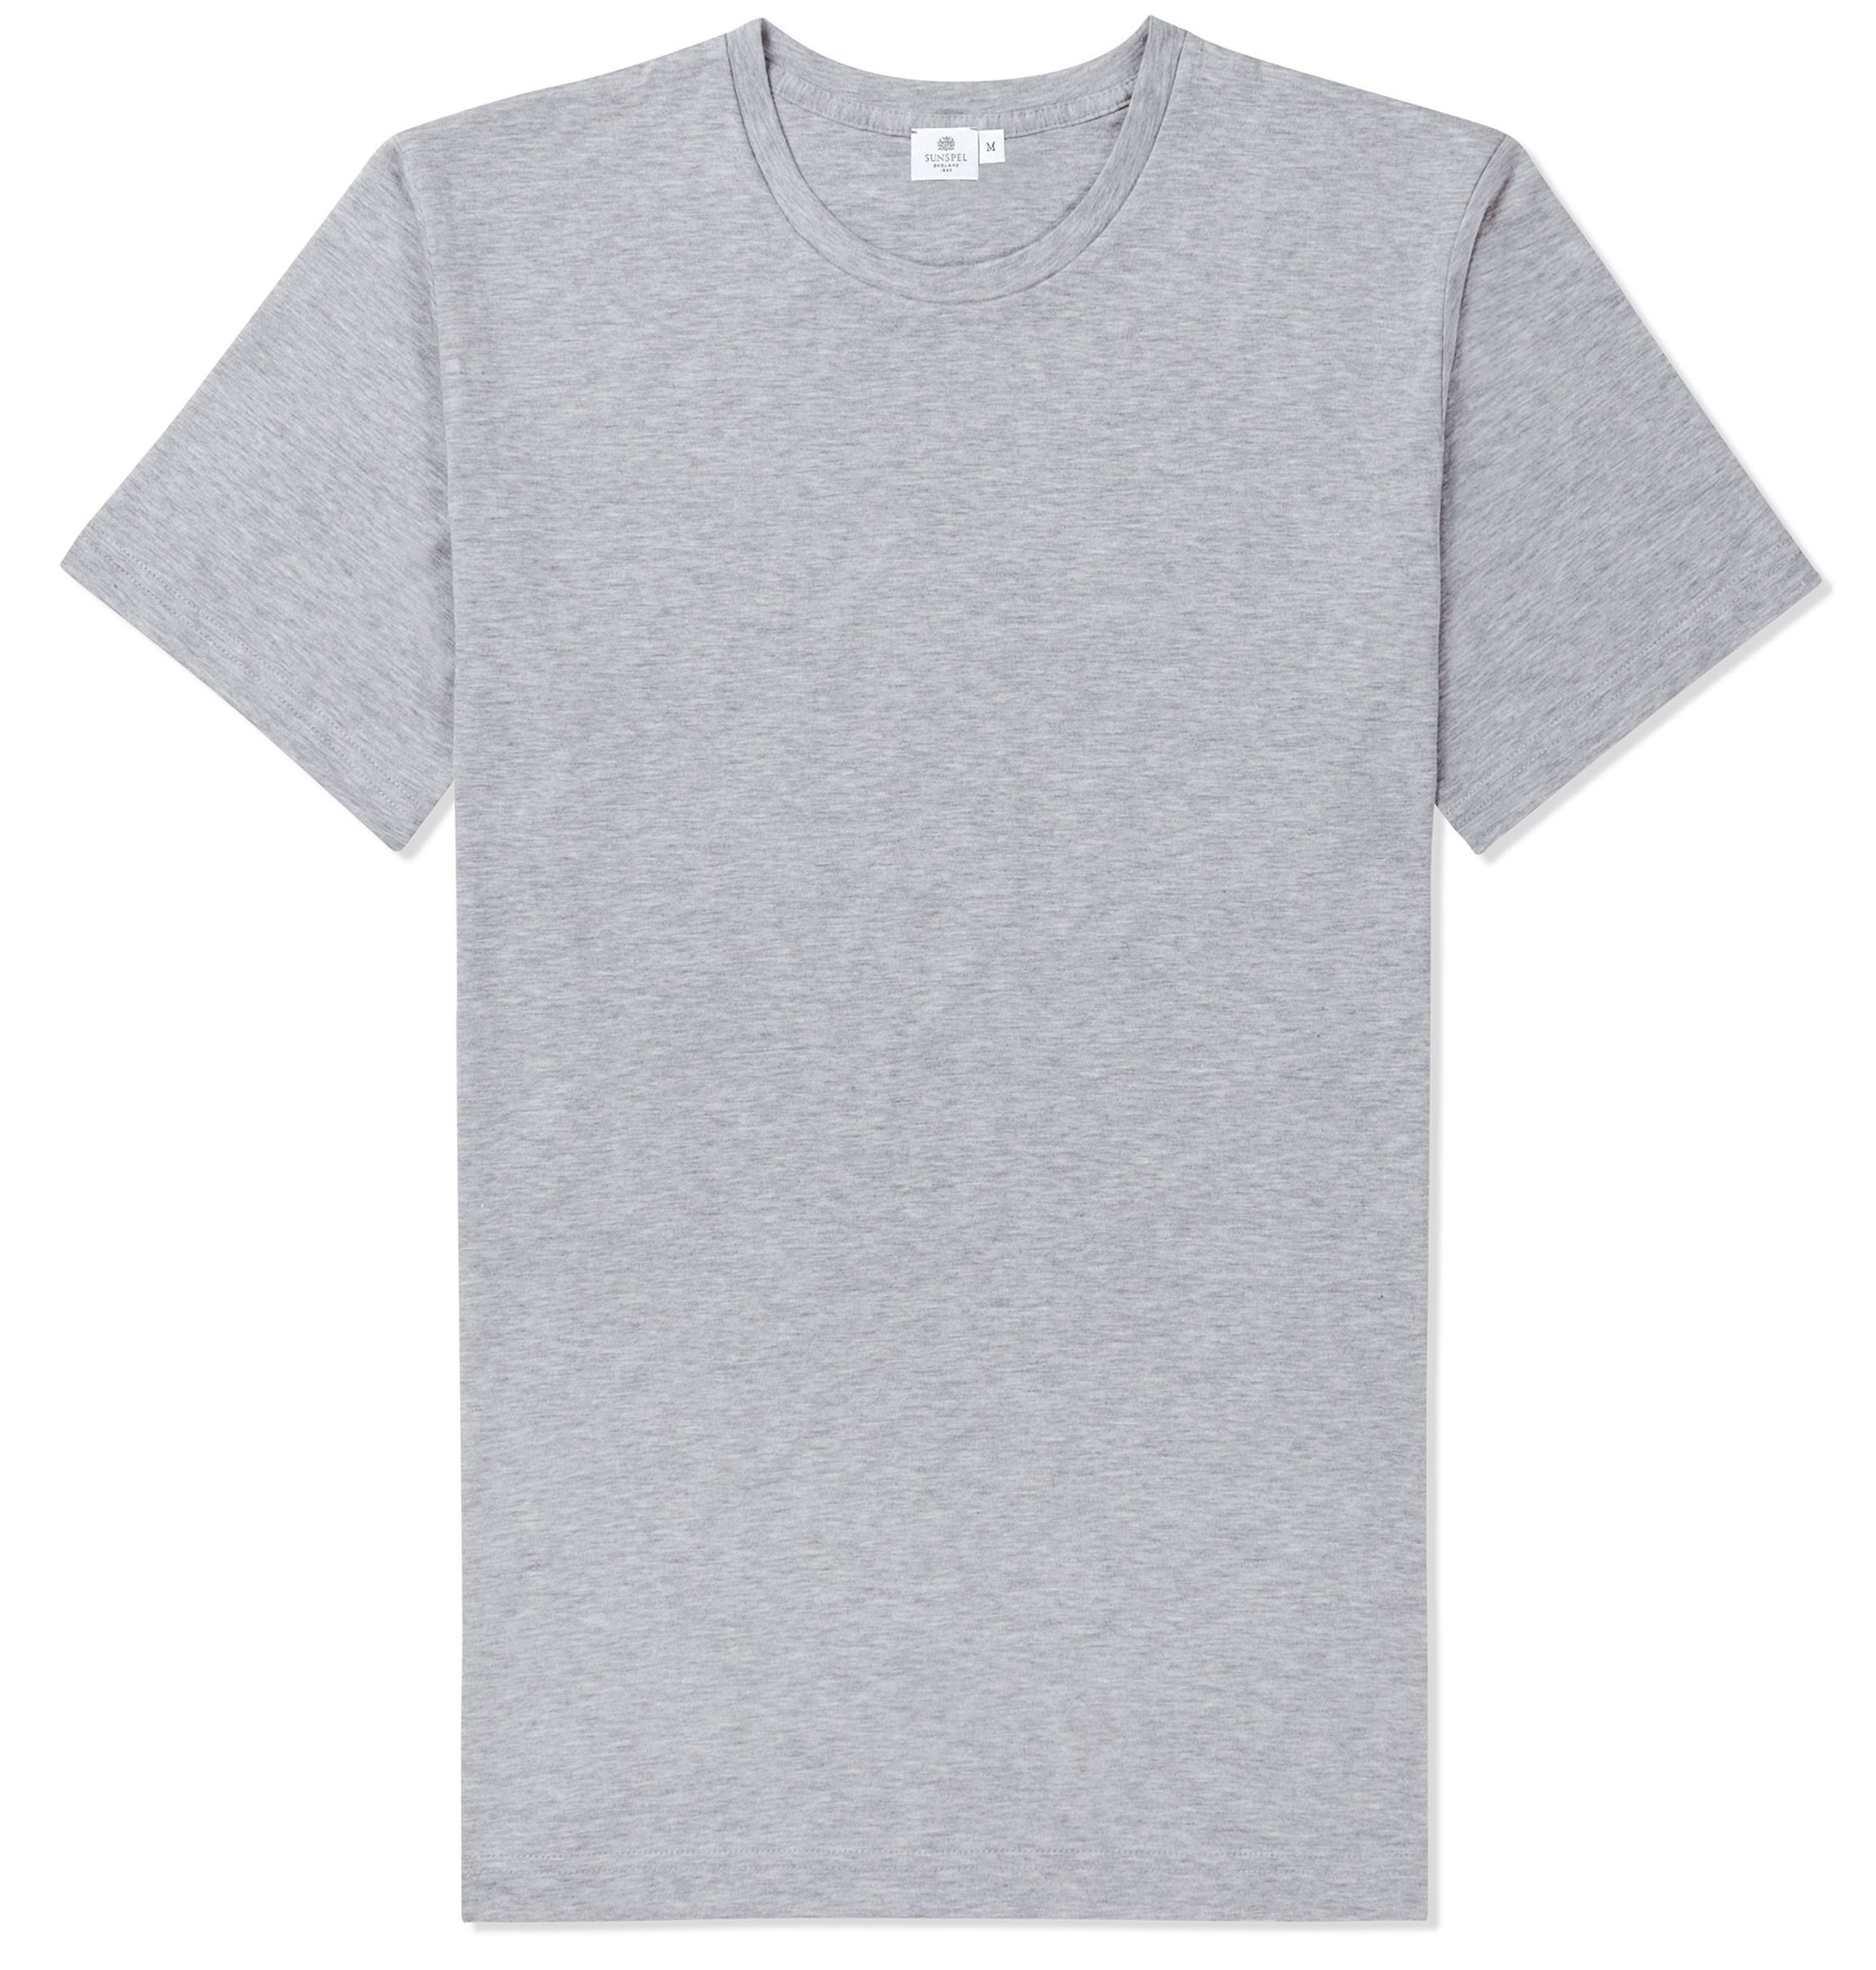 Download Lyst - Sunspel Riviera Crew Neck T-Shirt in Gray for Men